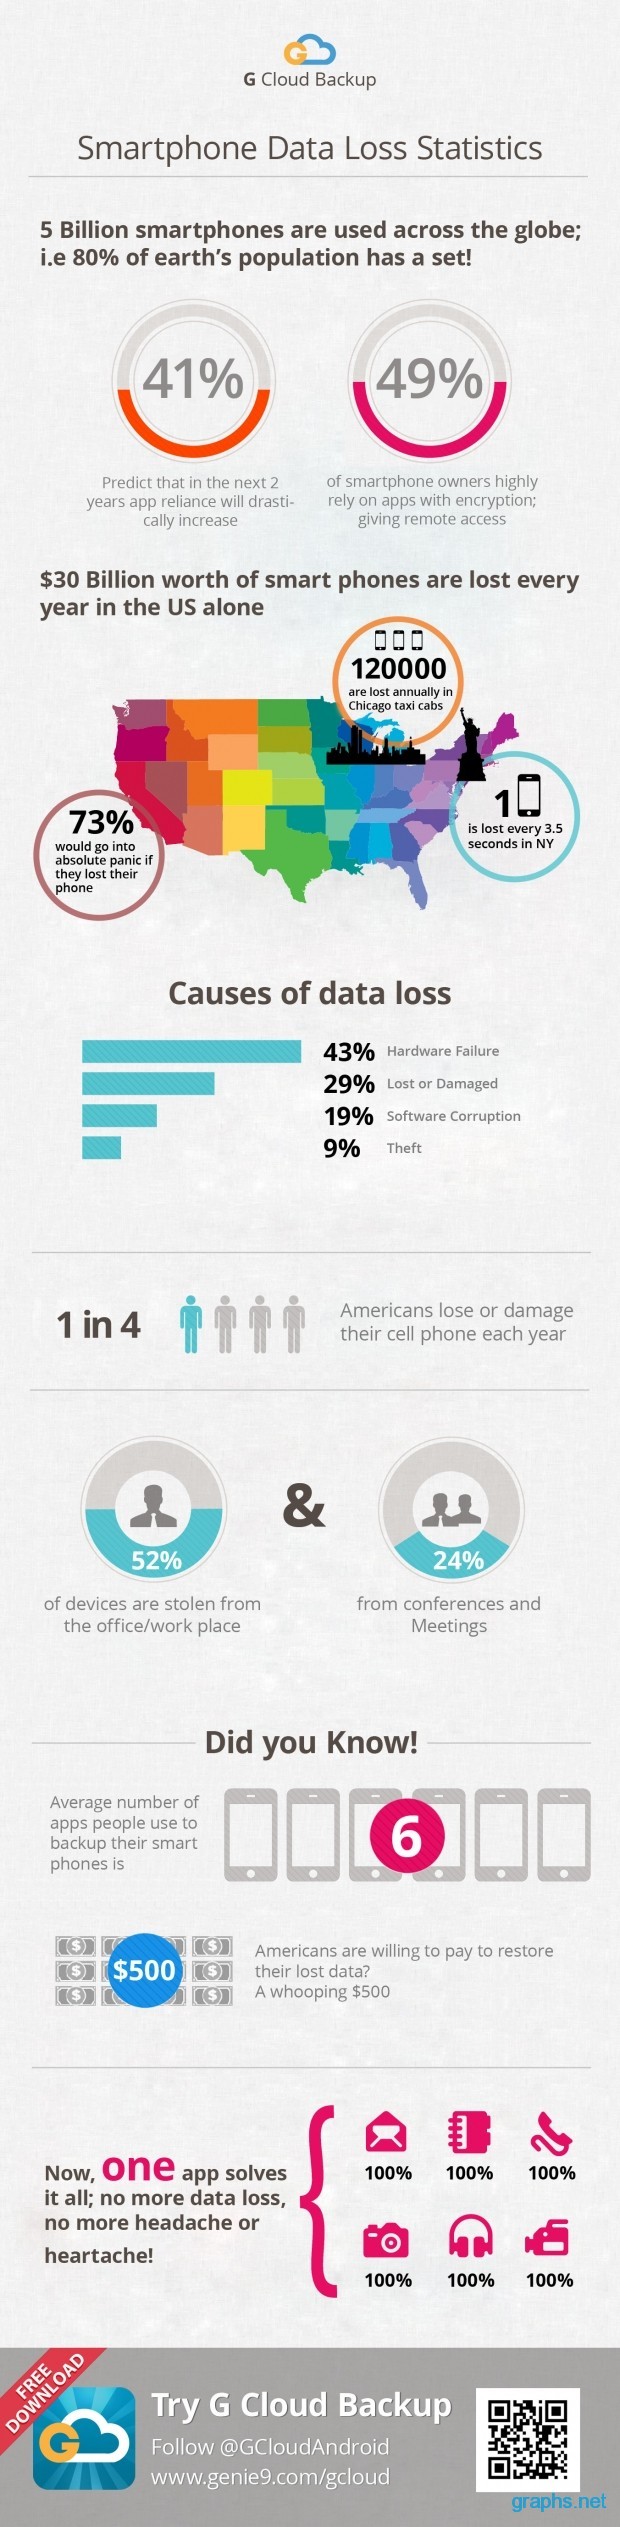 Data Loss Statistics in Smartphone